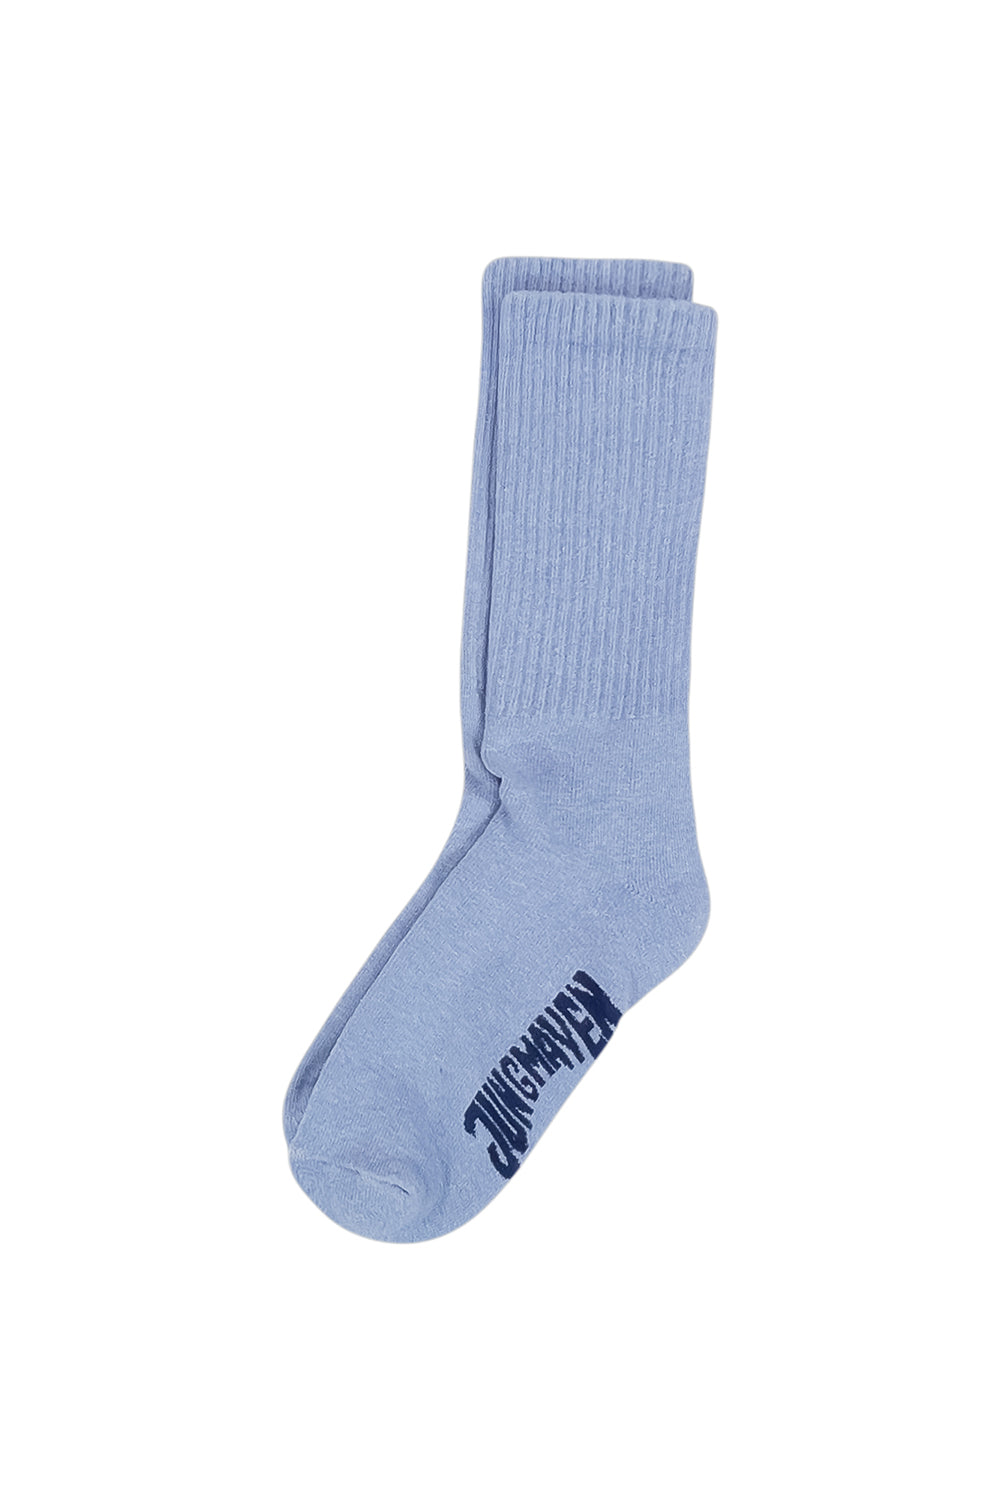 Hemp Wool Crew Socks | Jungmaven Hemp Clothing & Accessories / Color: Coastal Blue